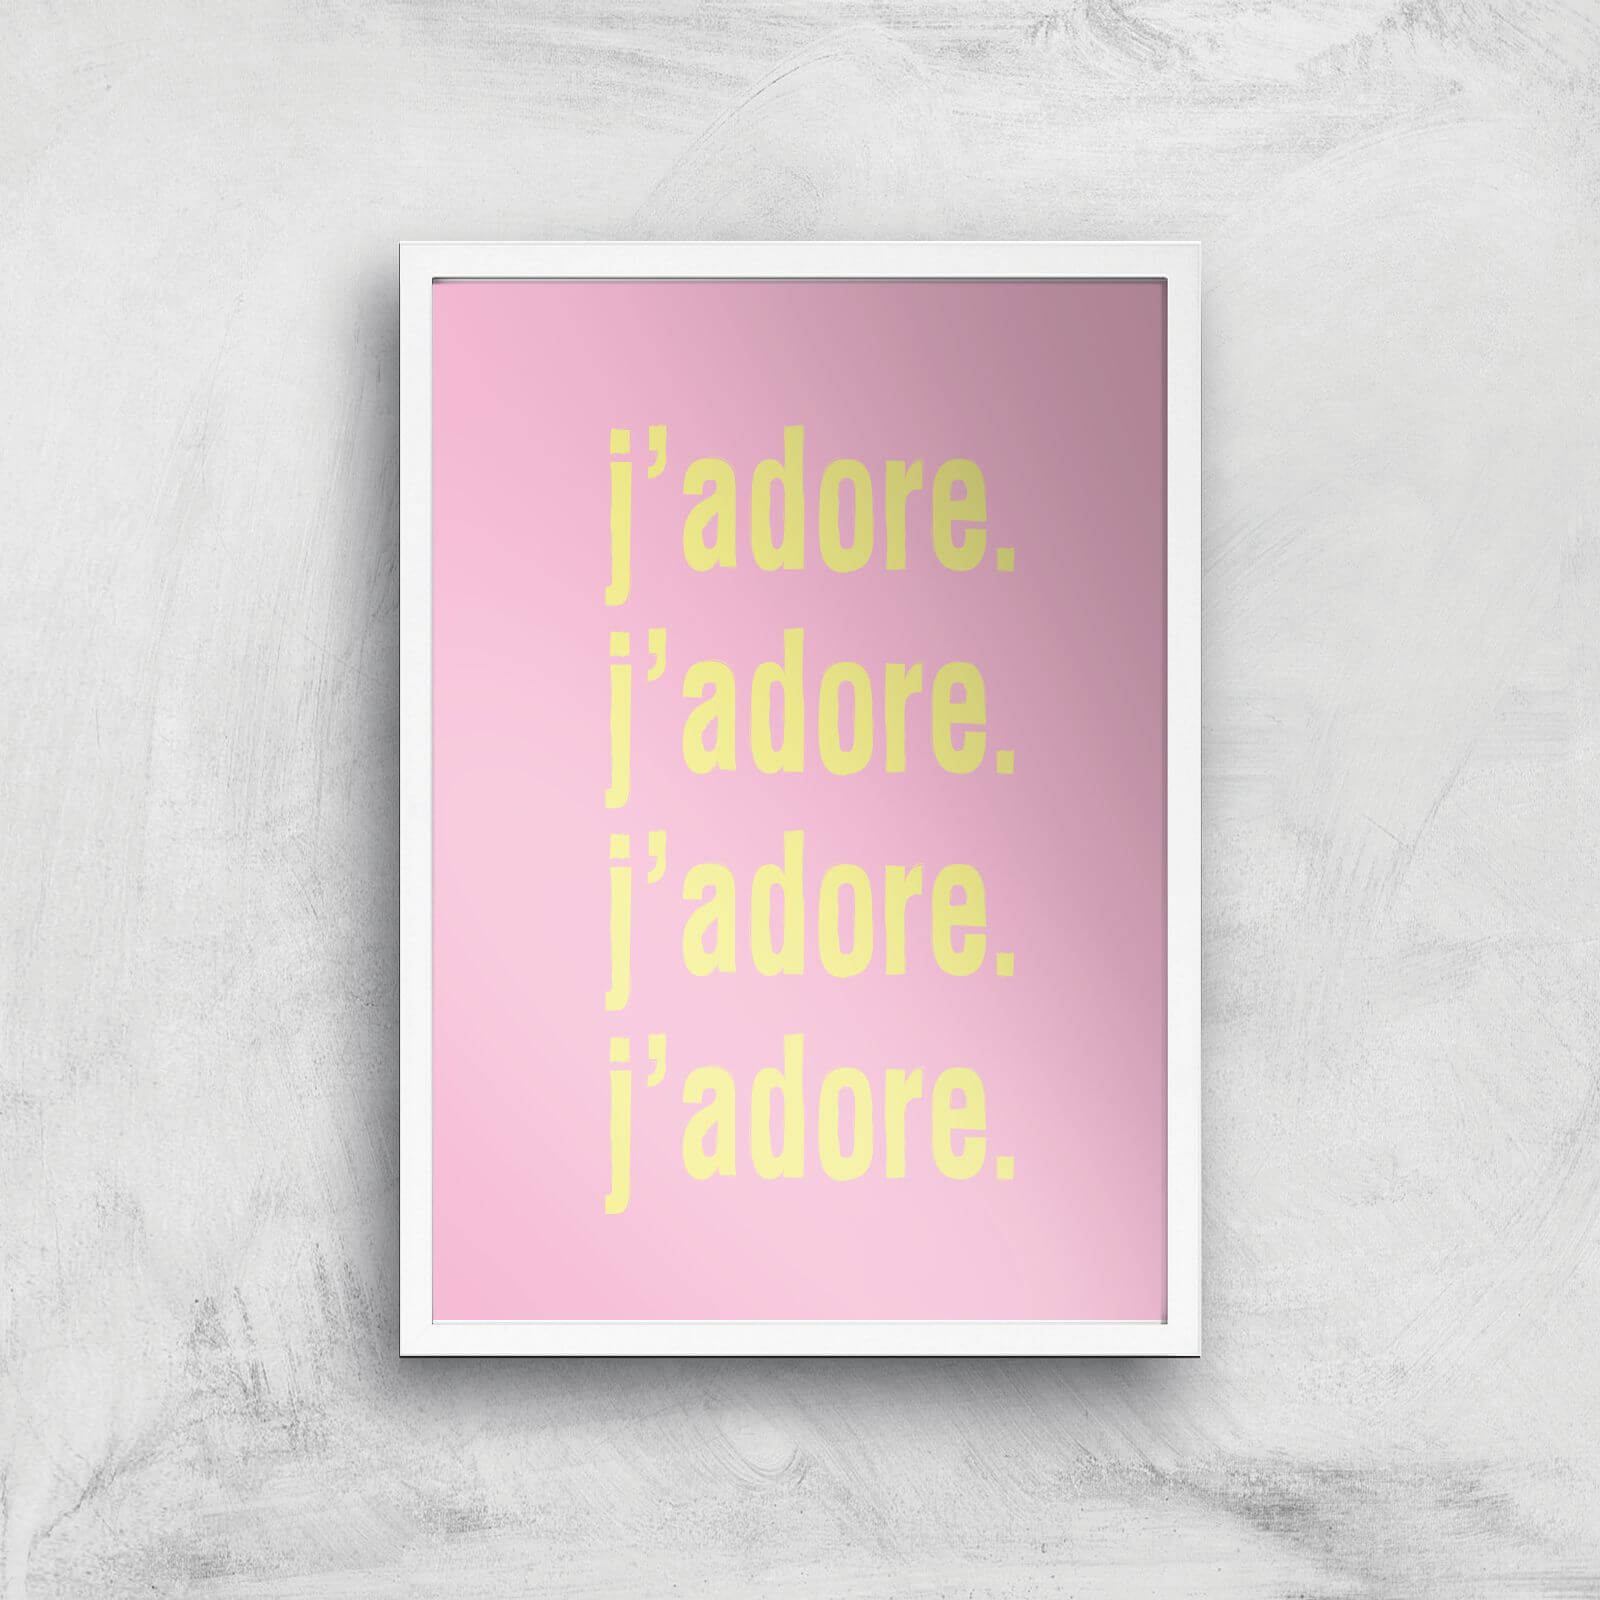 J'adore J'adore J'adore J'adore Giclee Art Print - A3 - White Frame